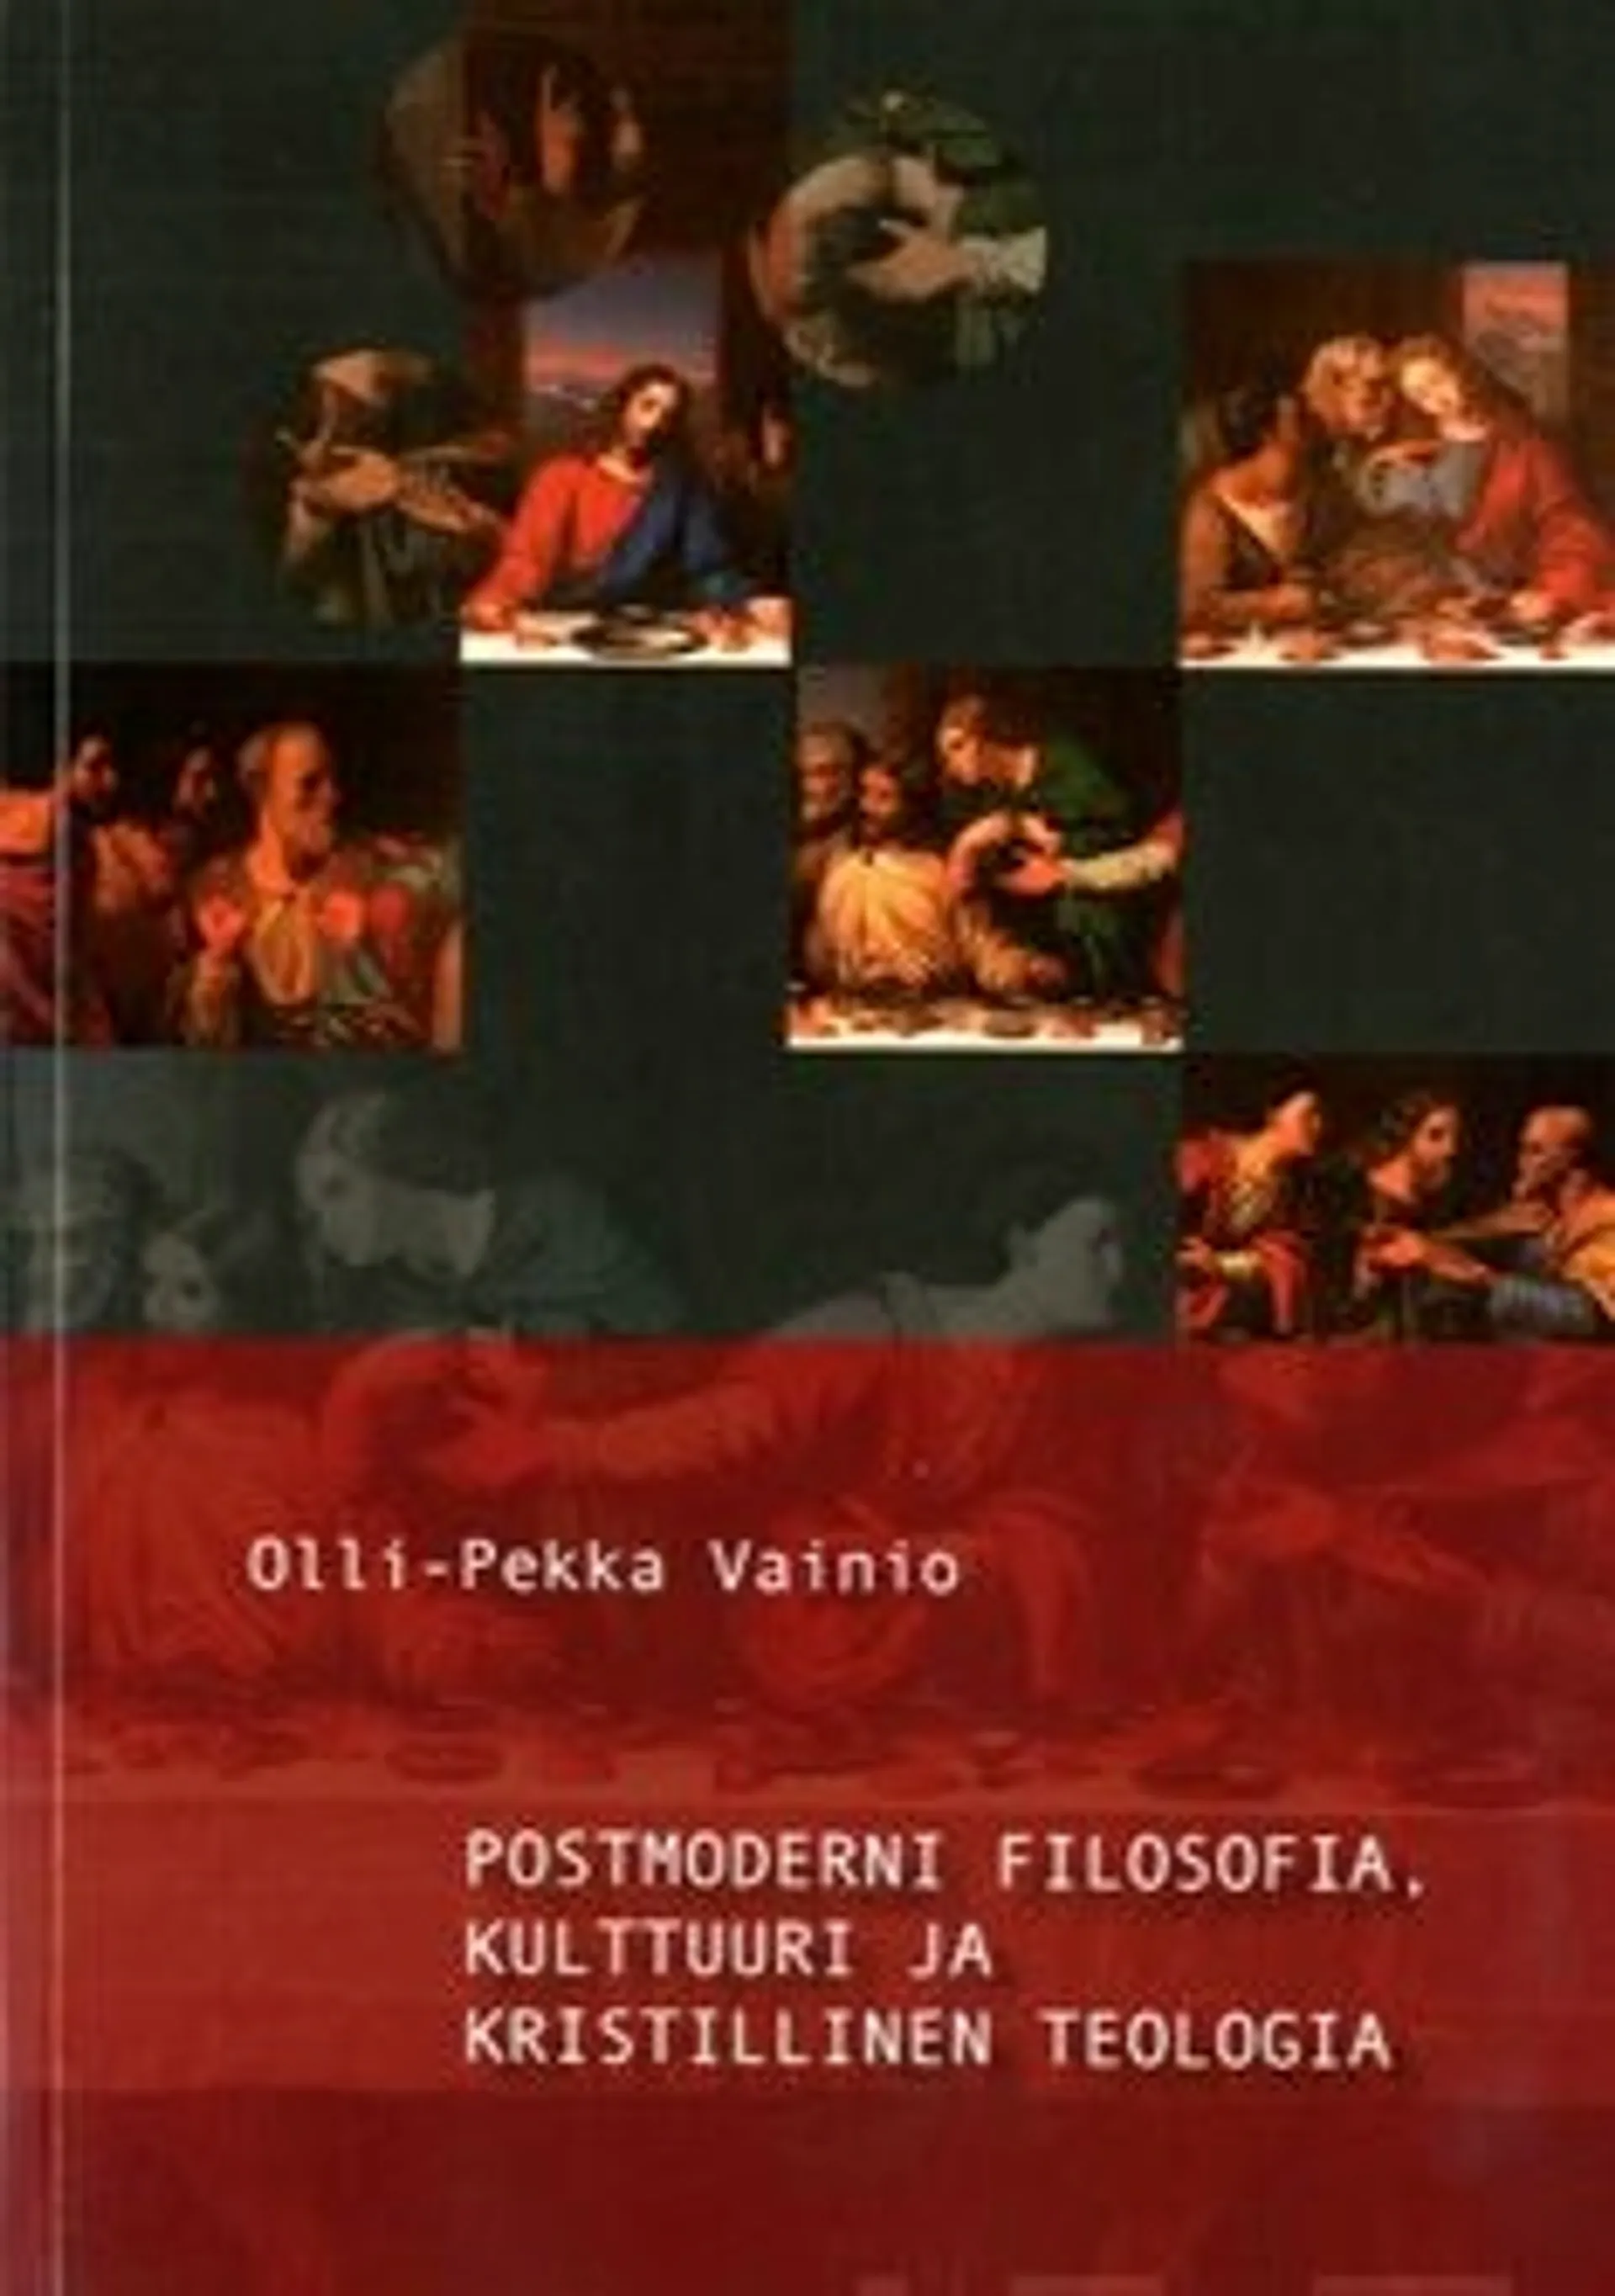 Vainio, Postmoderni filosofia, kulttuuri ja kristillinen teologia